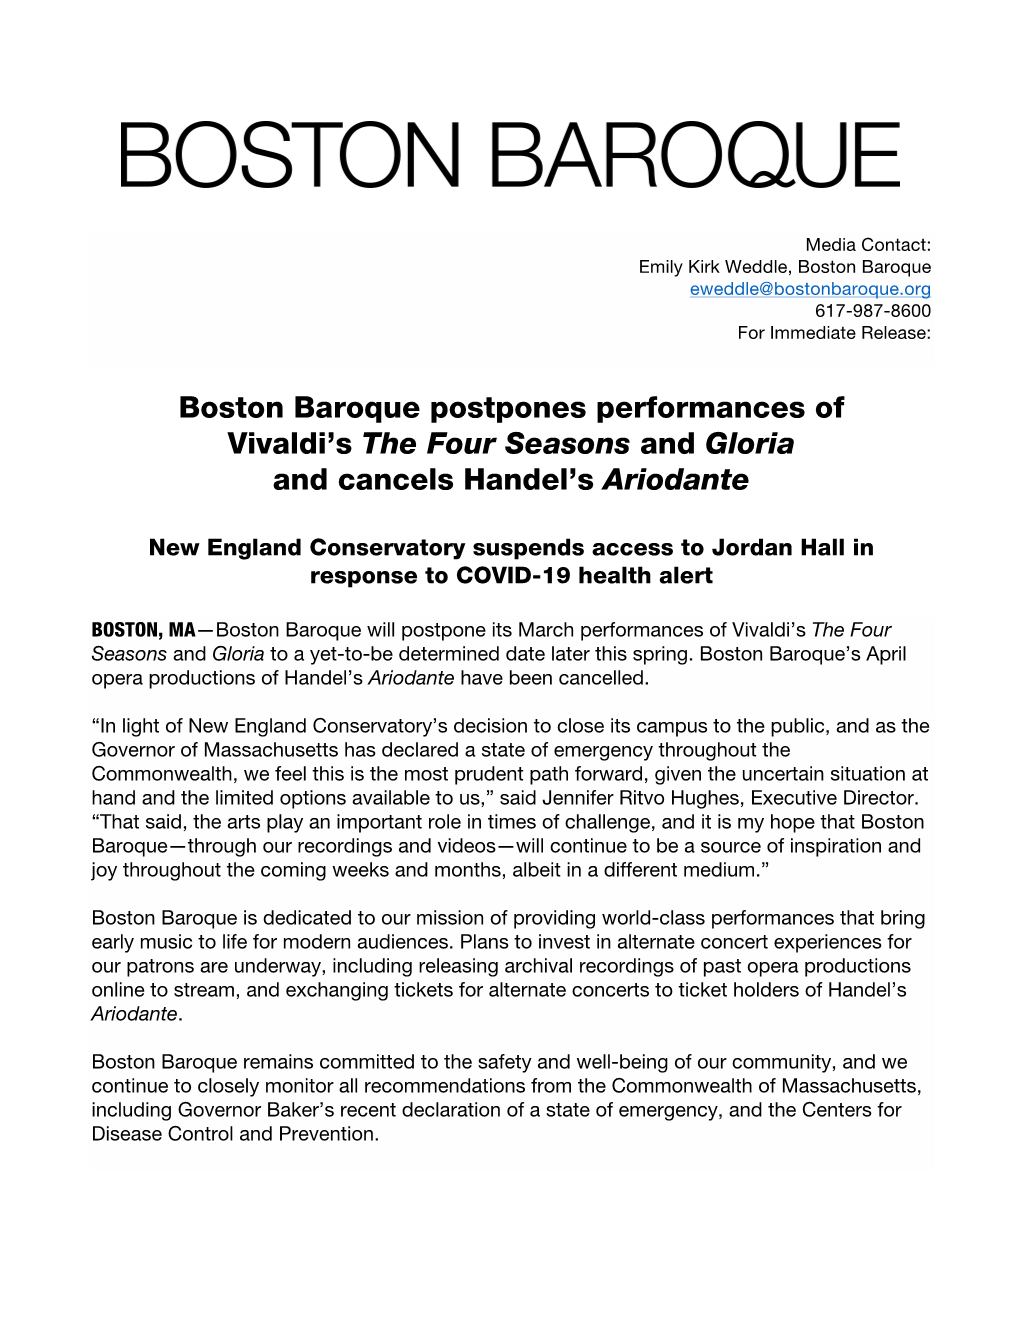 Boston Baroque Eweddle@Bostonbaroque.Org 617-987-8600 for Immediate Release